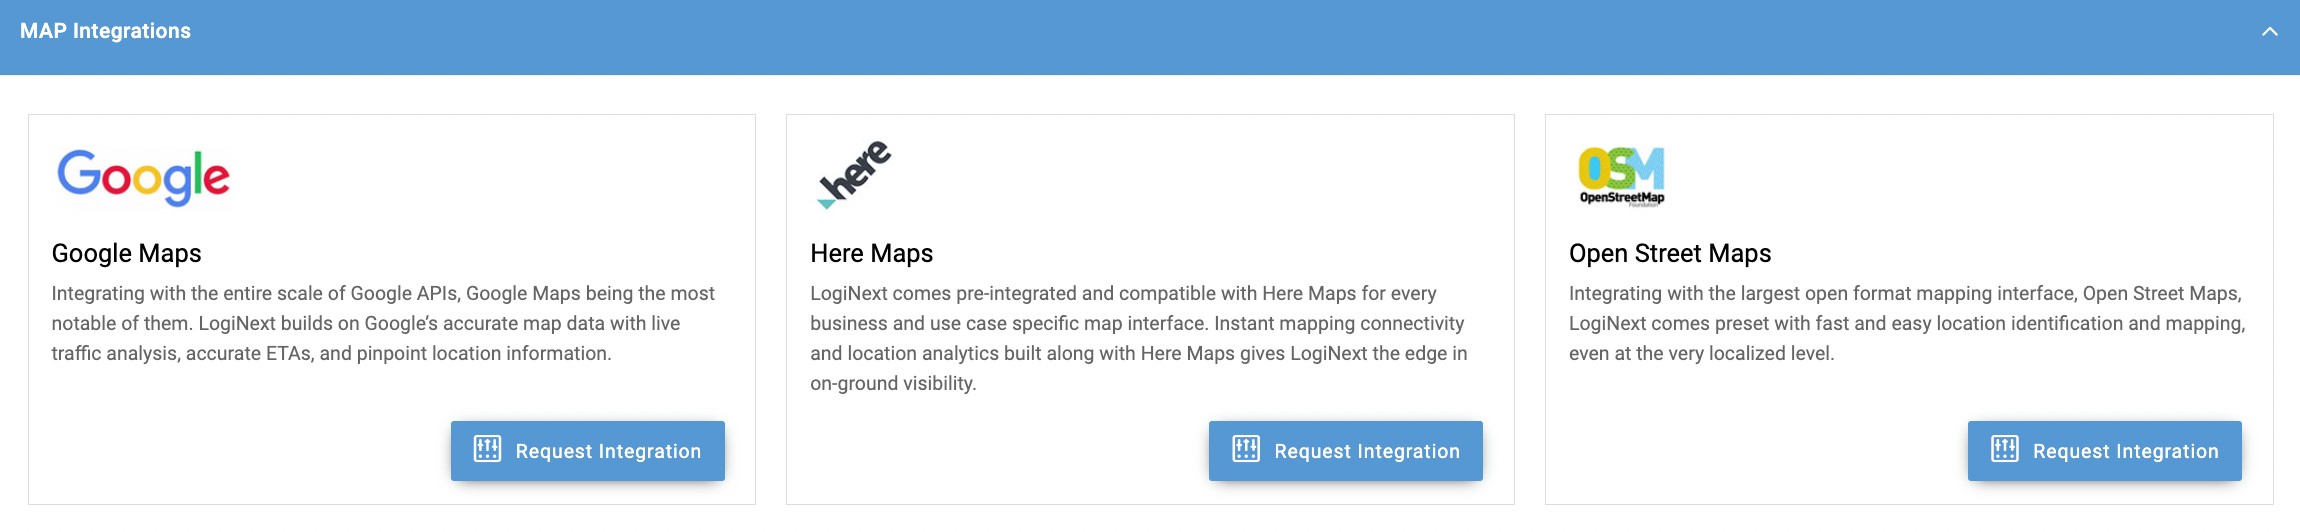 Map Integration Marketplace